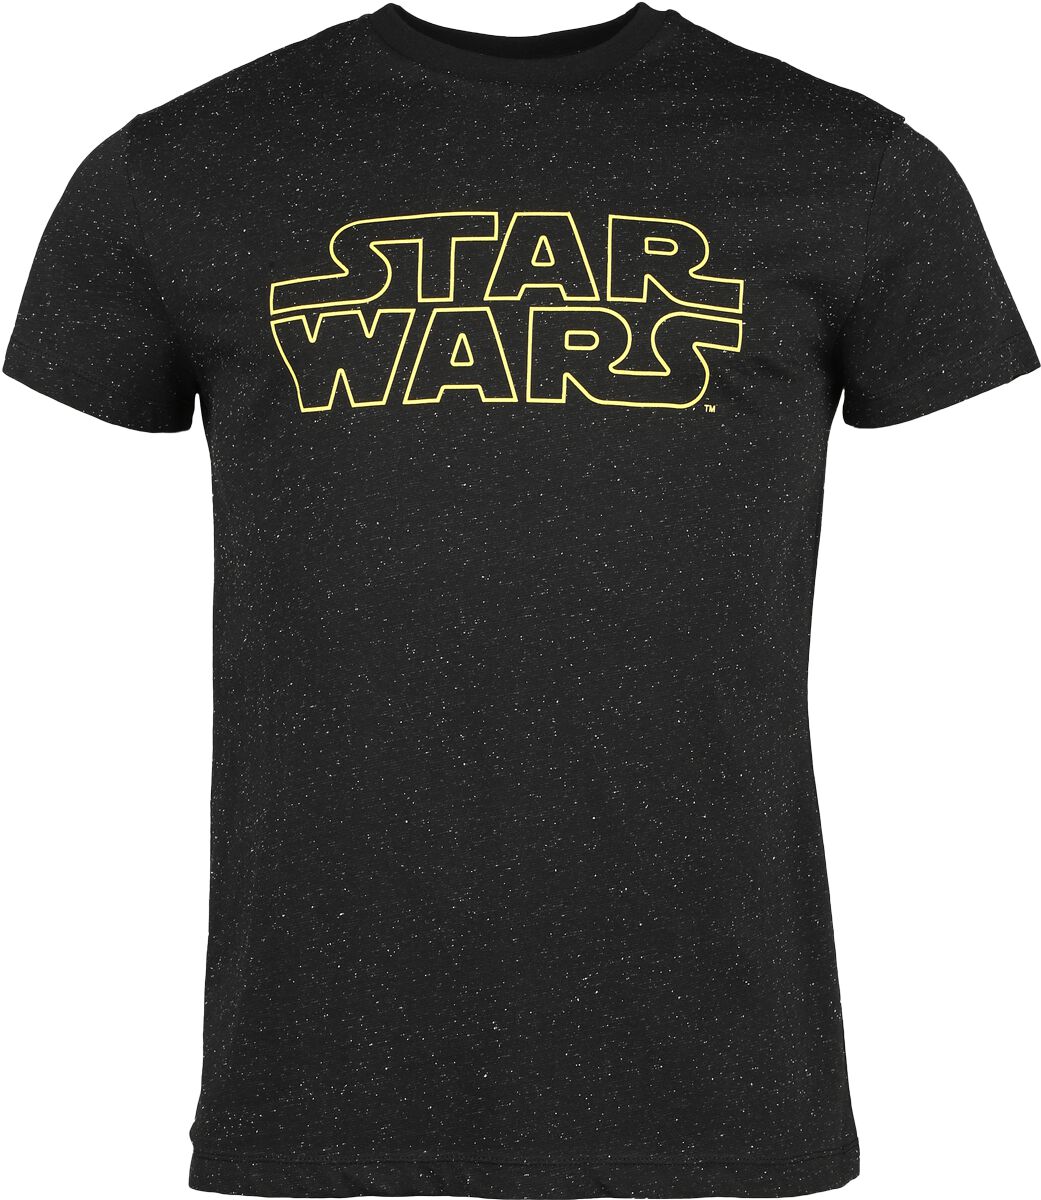 Star Wars Star Wars - Galaxy T-Shirt schwarz in L